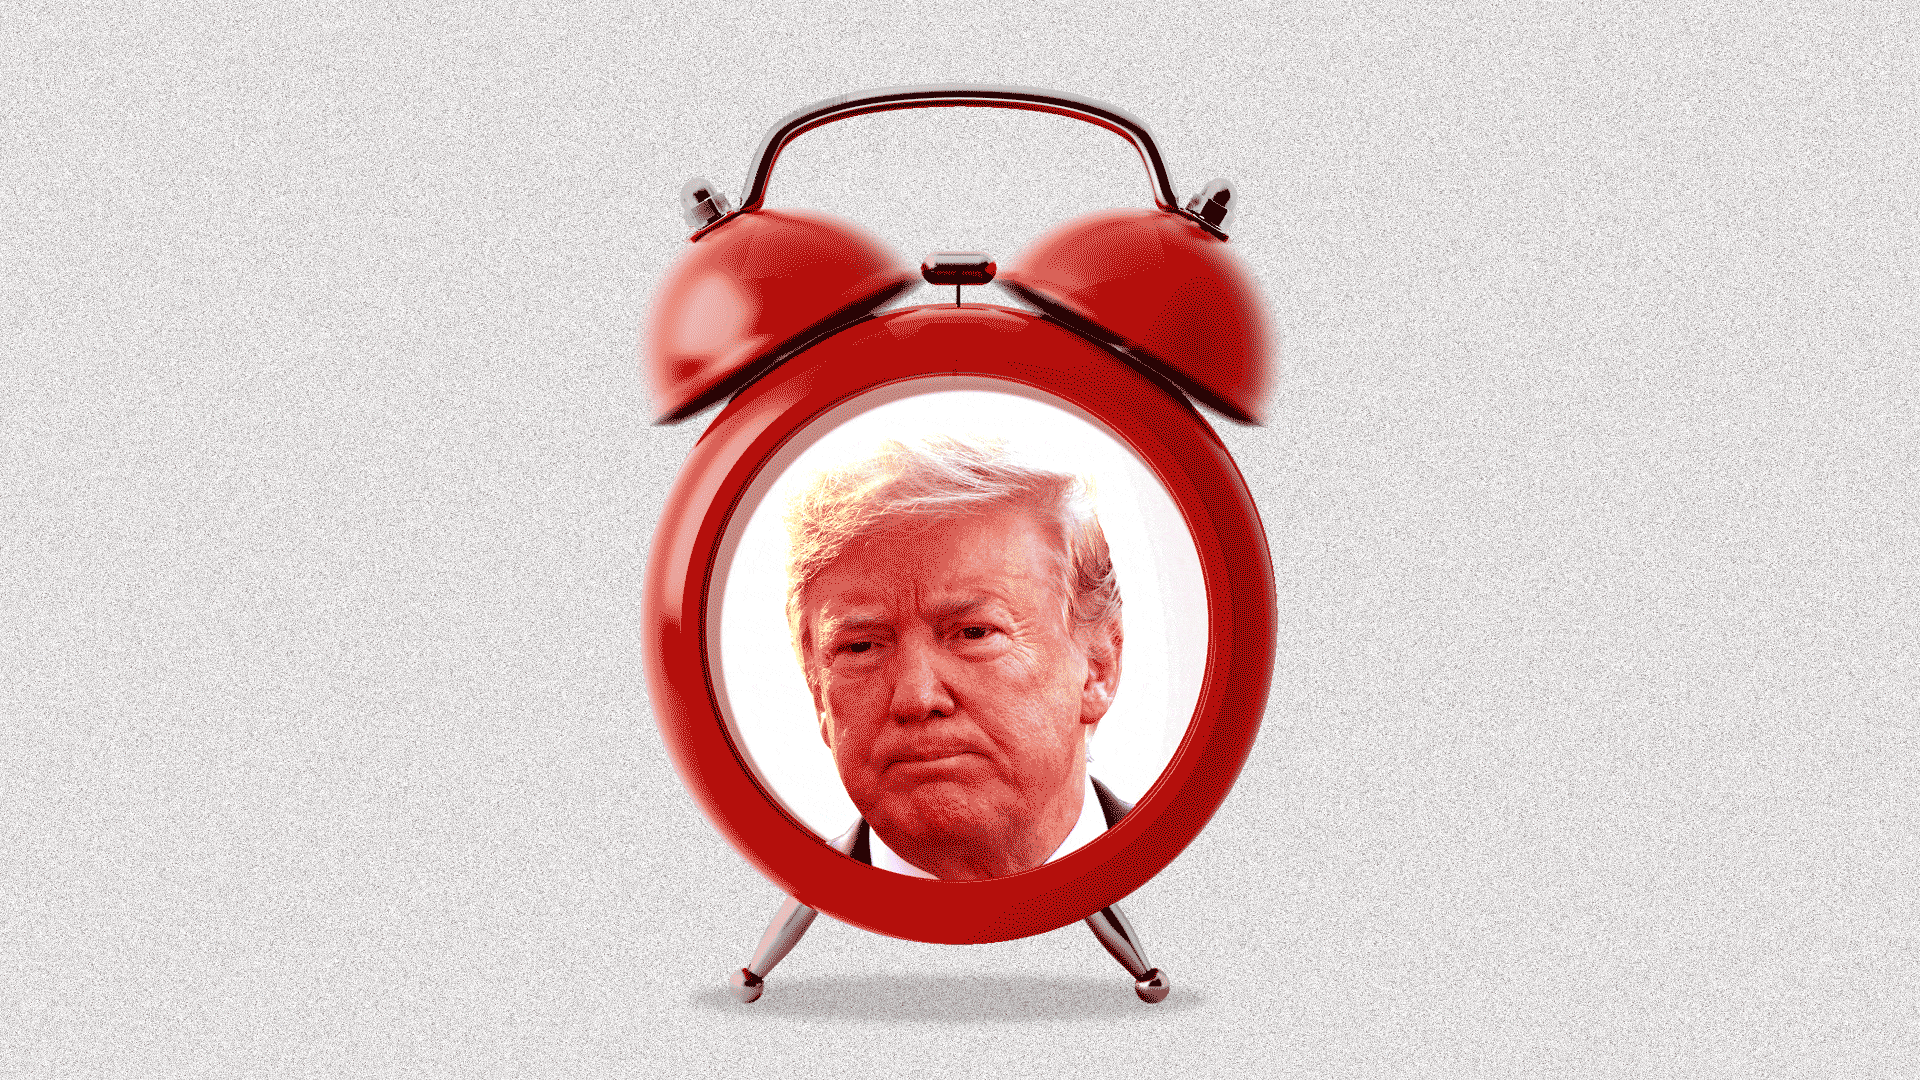 Illustration of President Donald Trump and an alarm clock